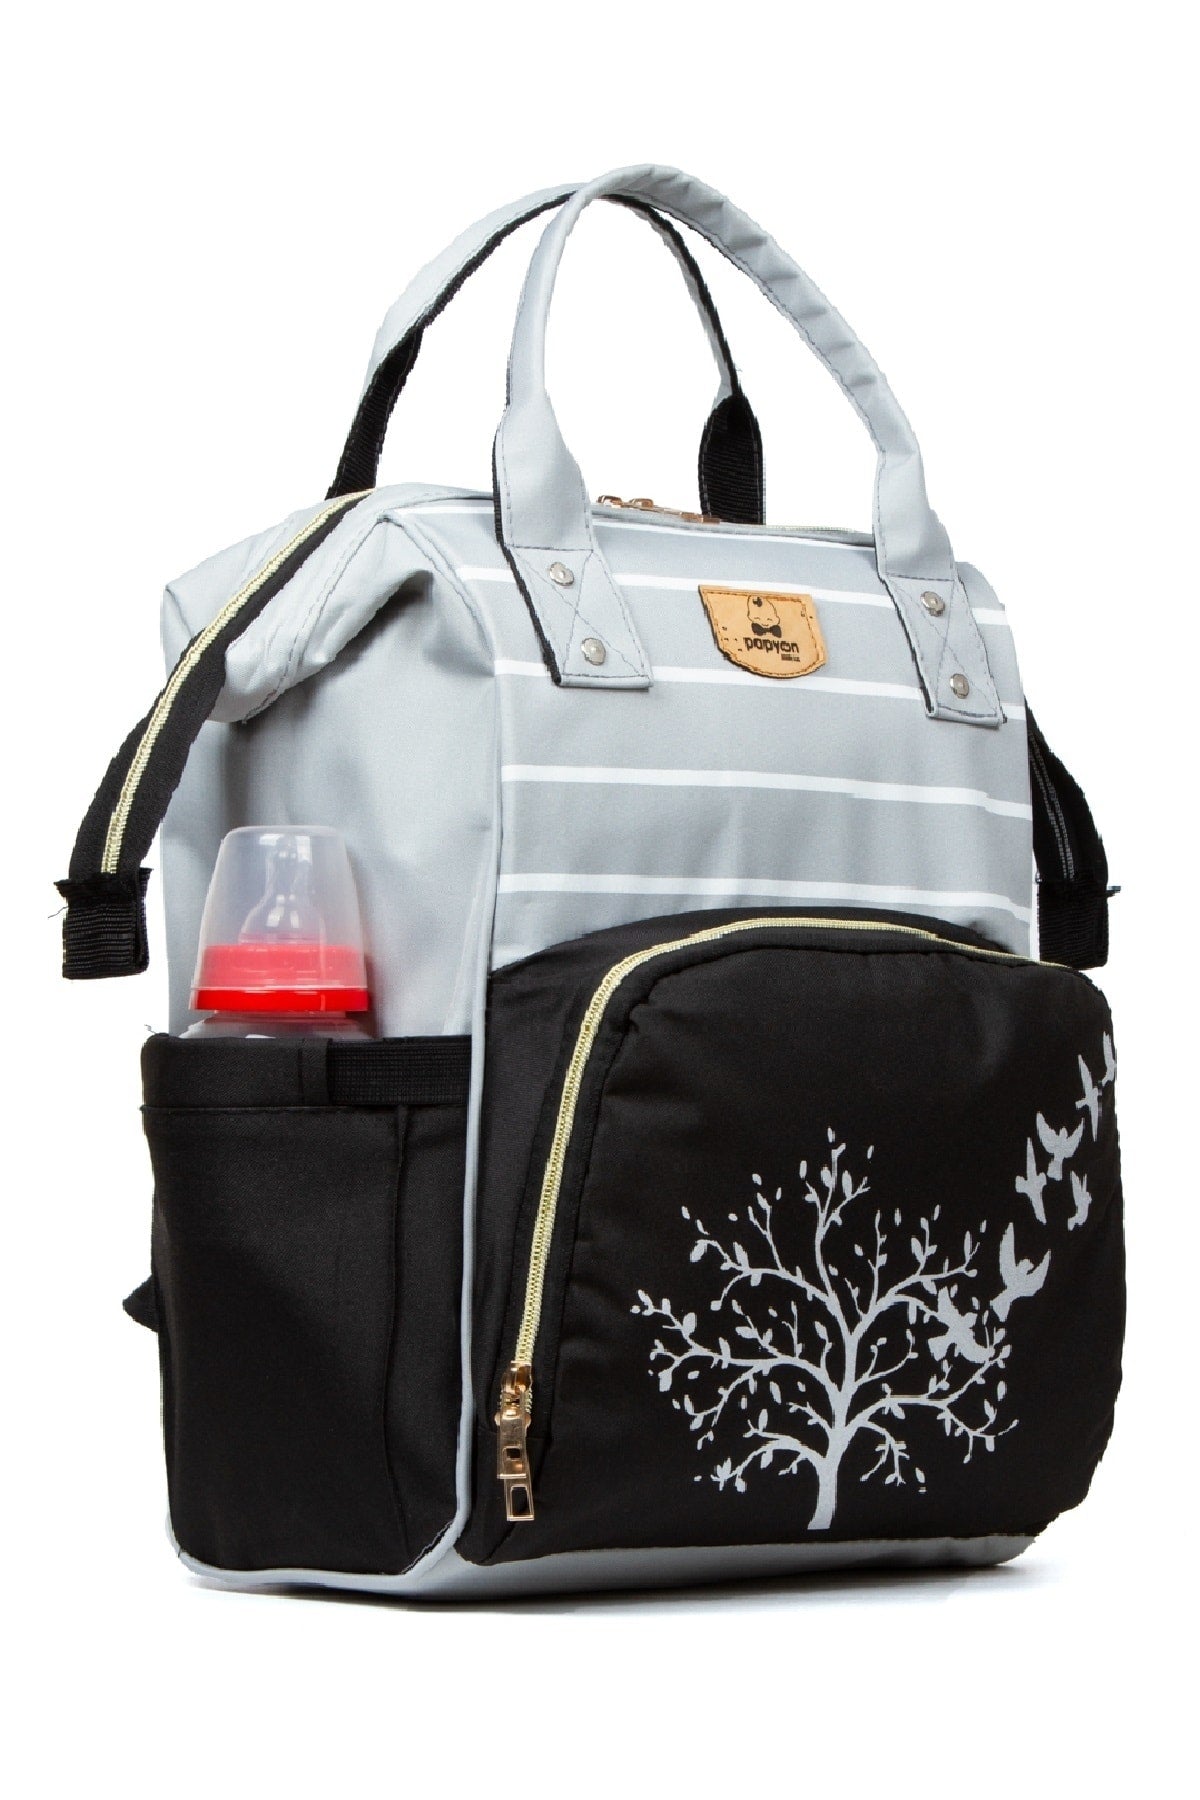 Mother Baby Care Backpack Baby Bottle Thermos Eyed Metal Hook Stroller Hanger Bracket Gift